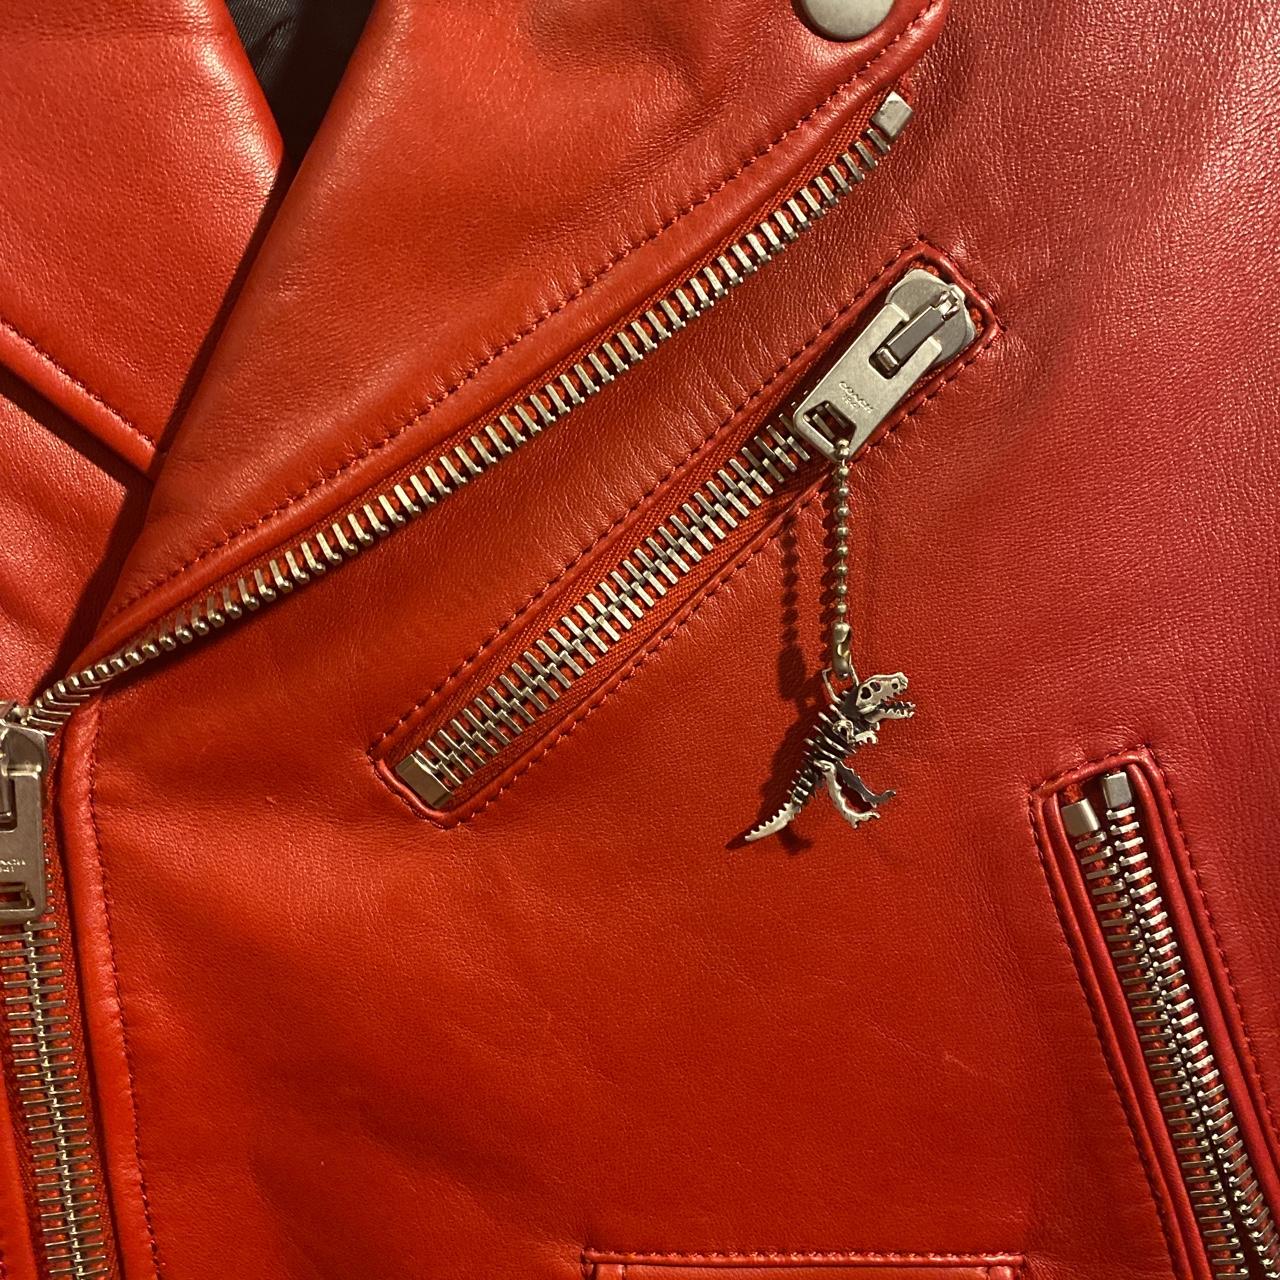 Coach Men's leather baseball jacket Real leather - Depop